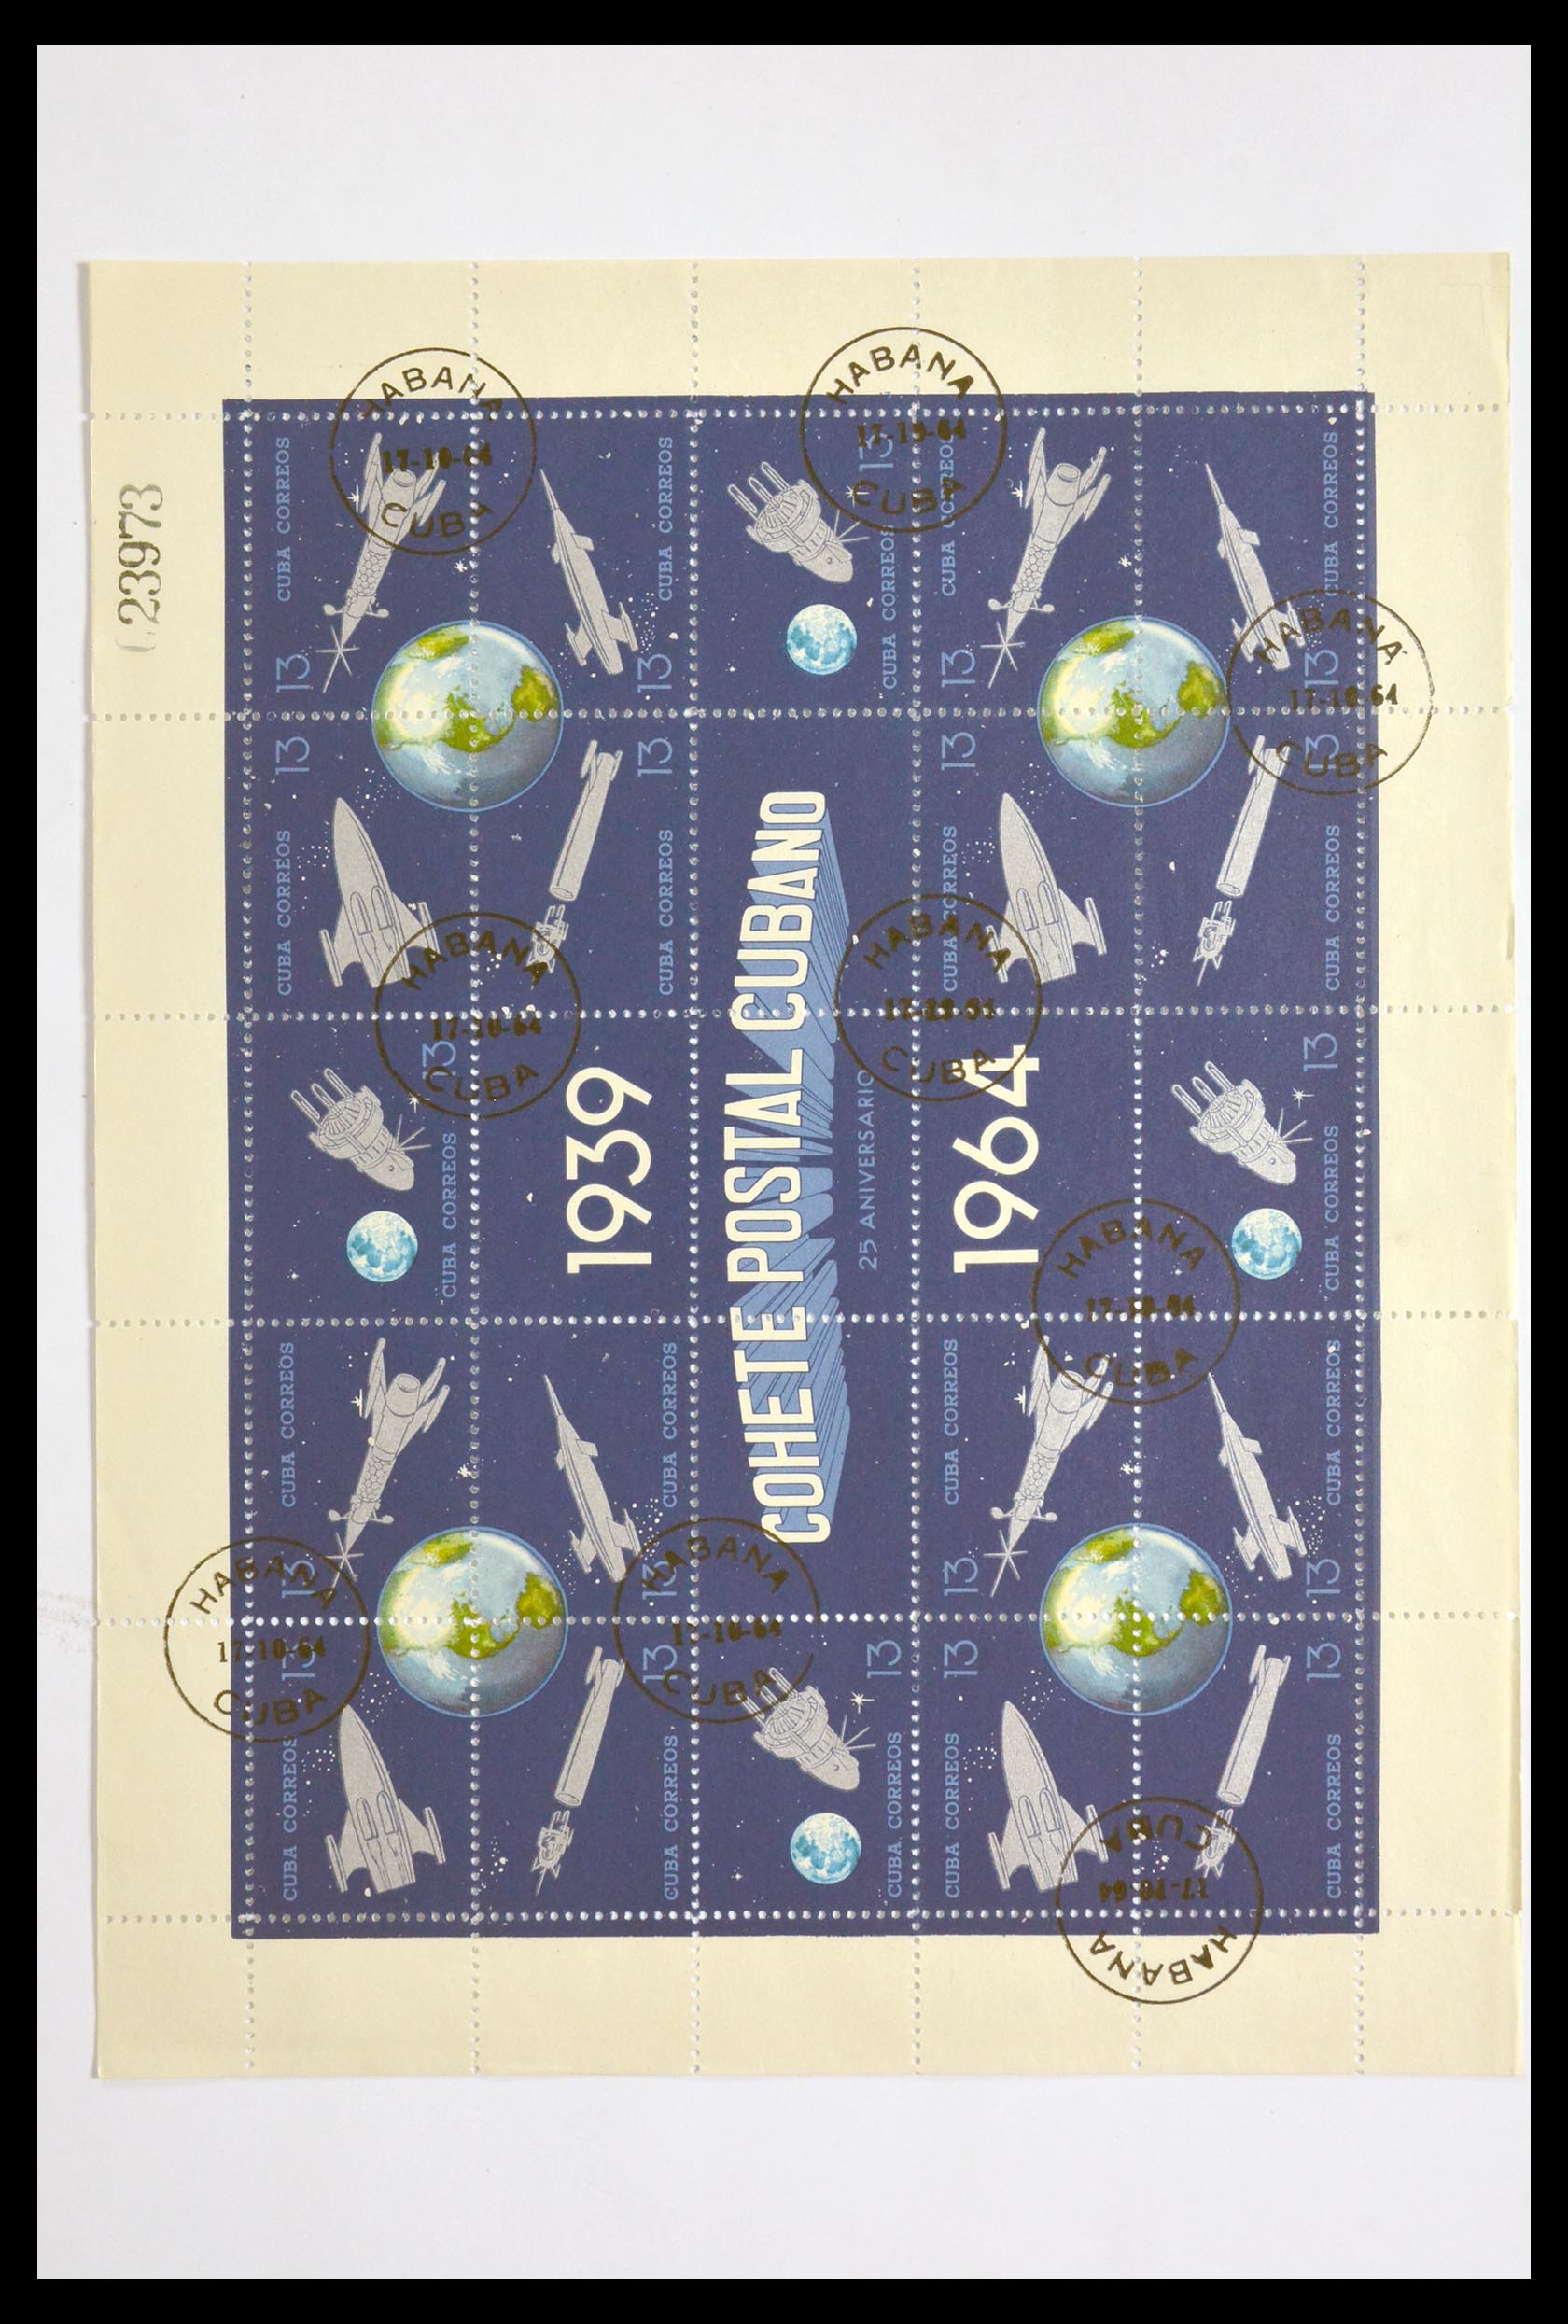 29917 071 - 29917 Latijns Amerika luchtpostzegels.